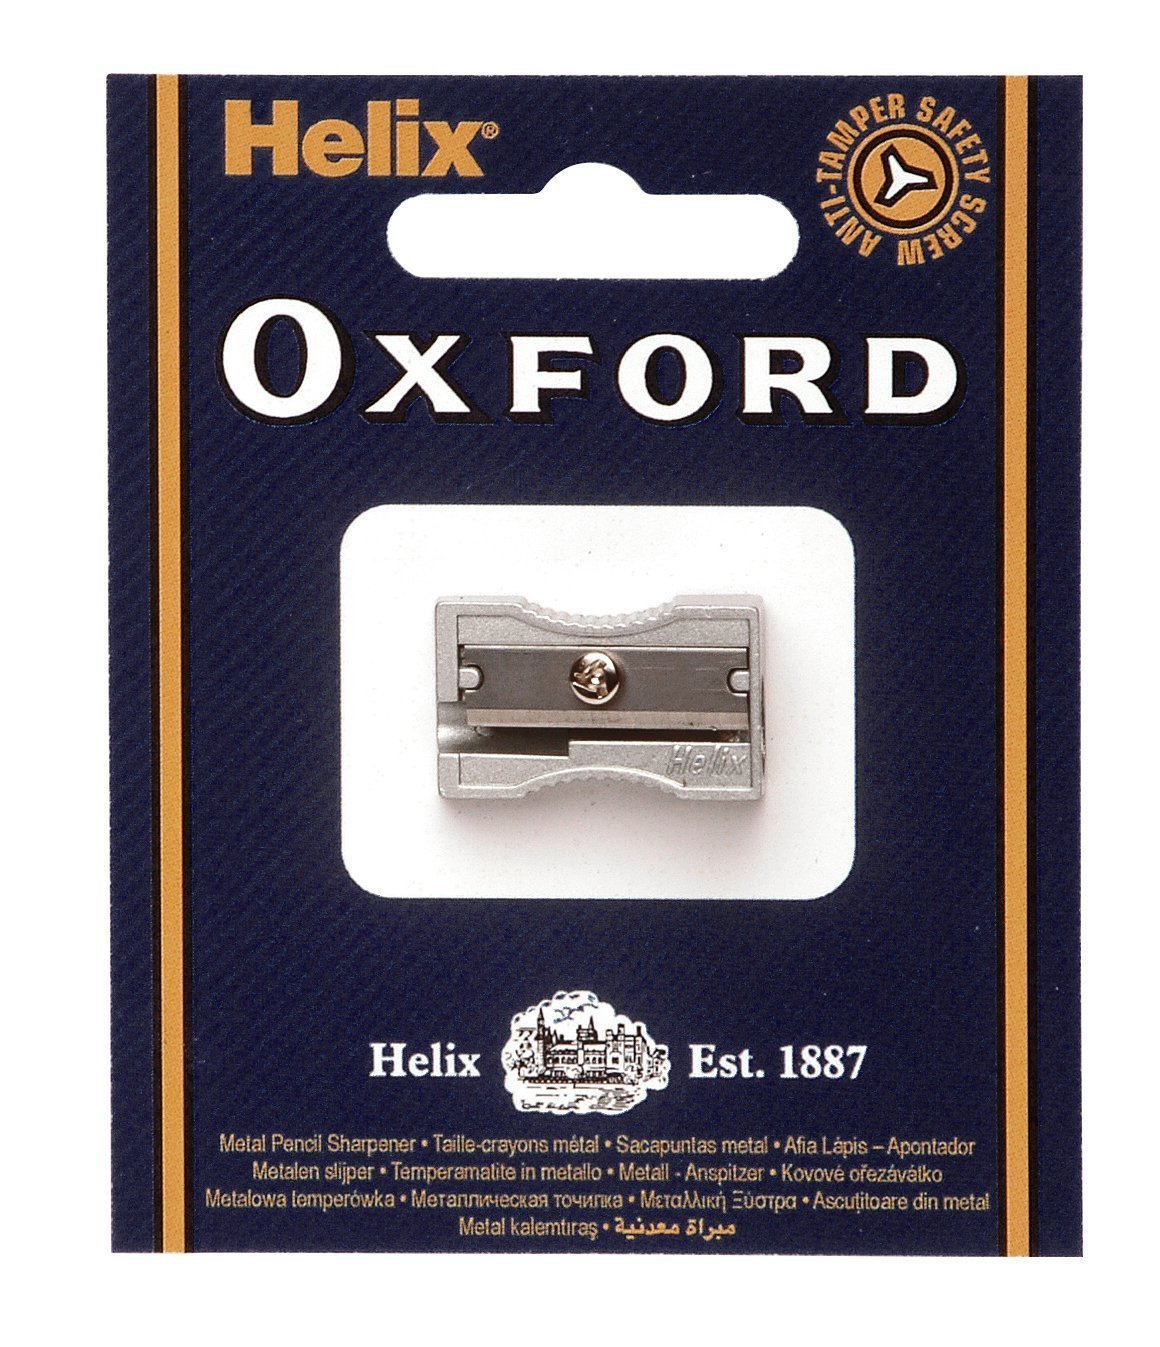 Helix Oxford Metal Sharpener